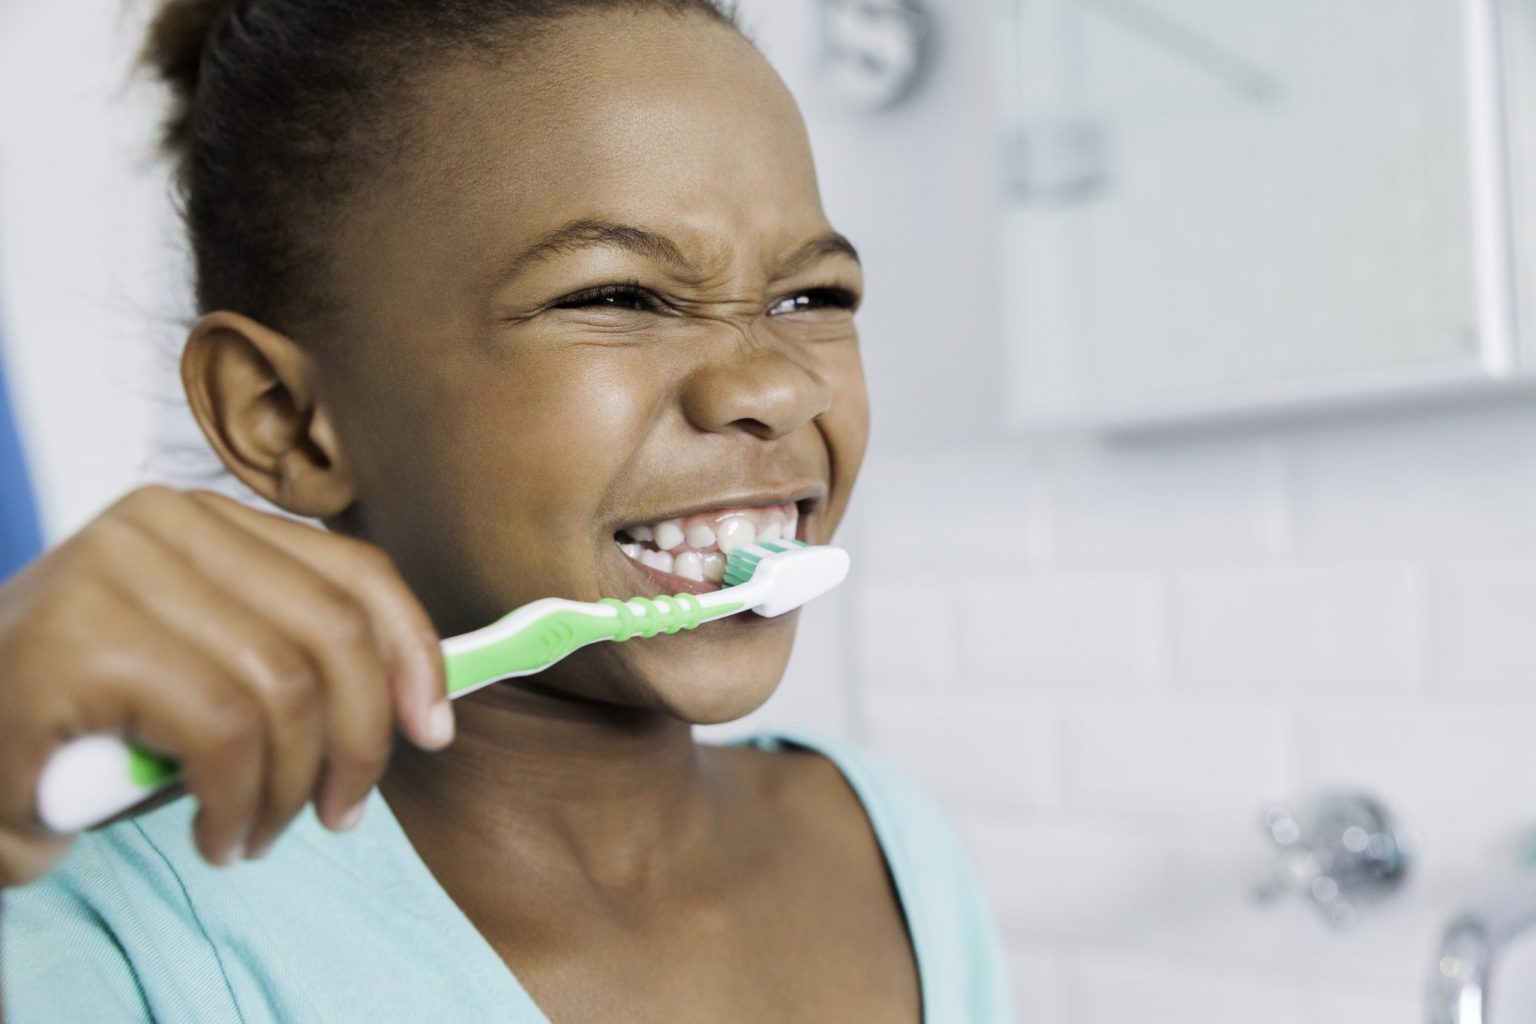 Beautiful Young Girl Brushing Her Teeth. 815356714 5616x3744 Scaled.jpeg